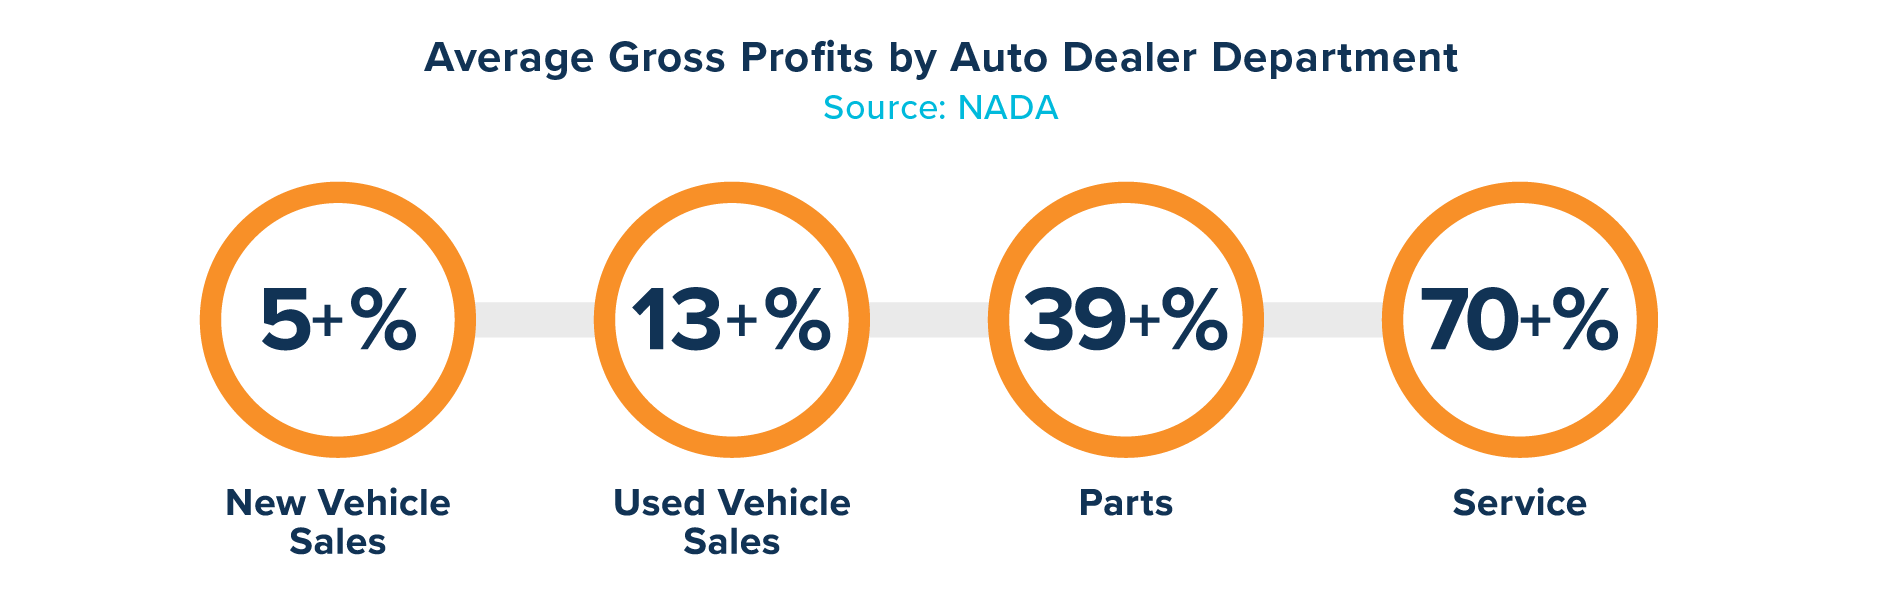 Gross Profits by Auto Dealer Departments graphic